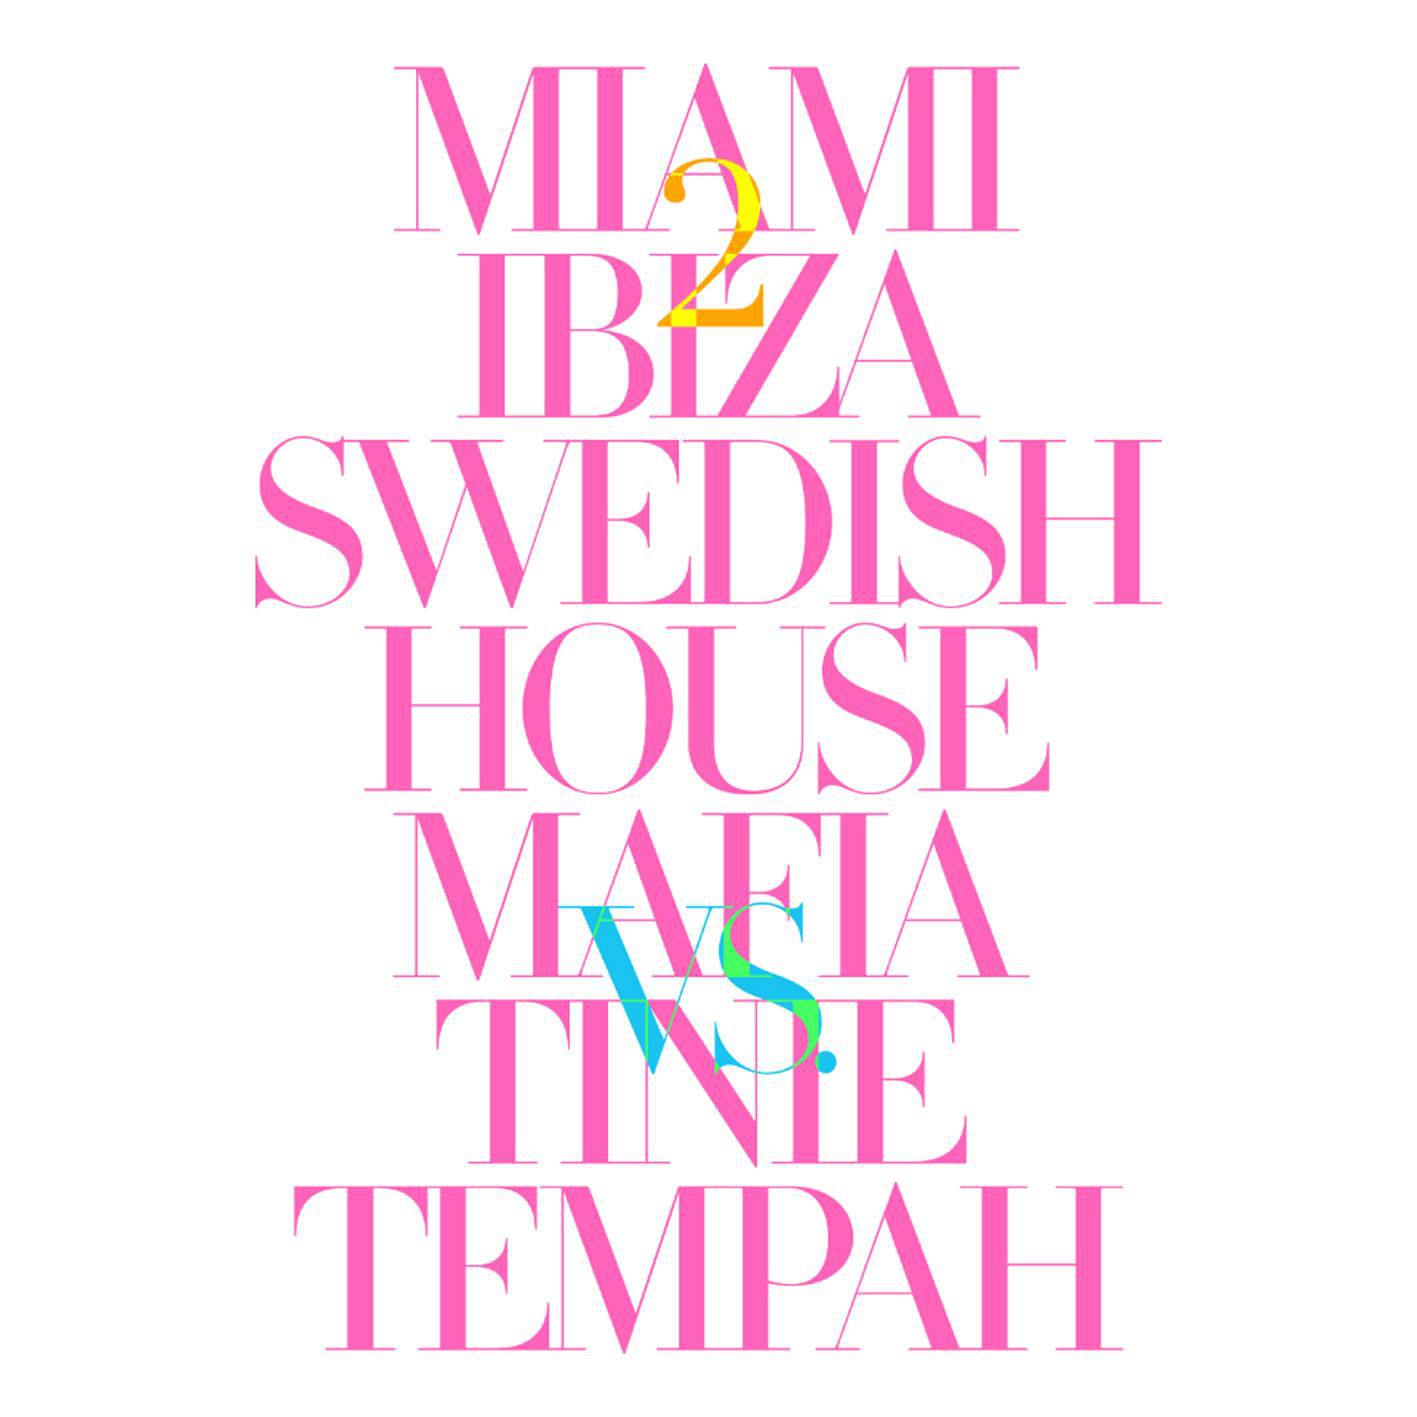 Swedish House Mafia & Tinie Tempah Miami 2 Ibiza cover artwork